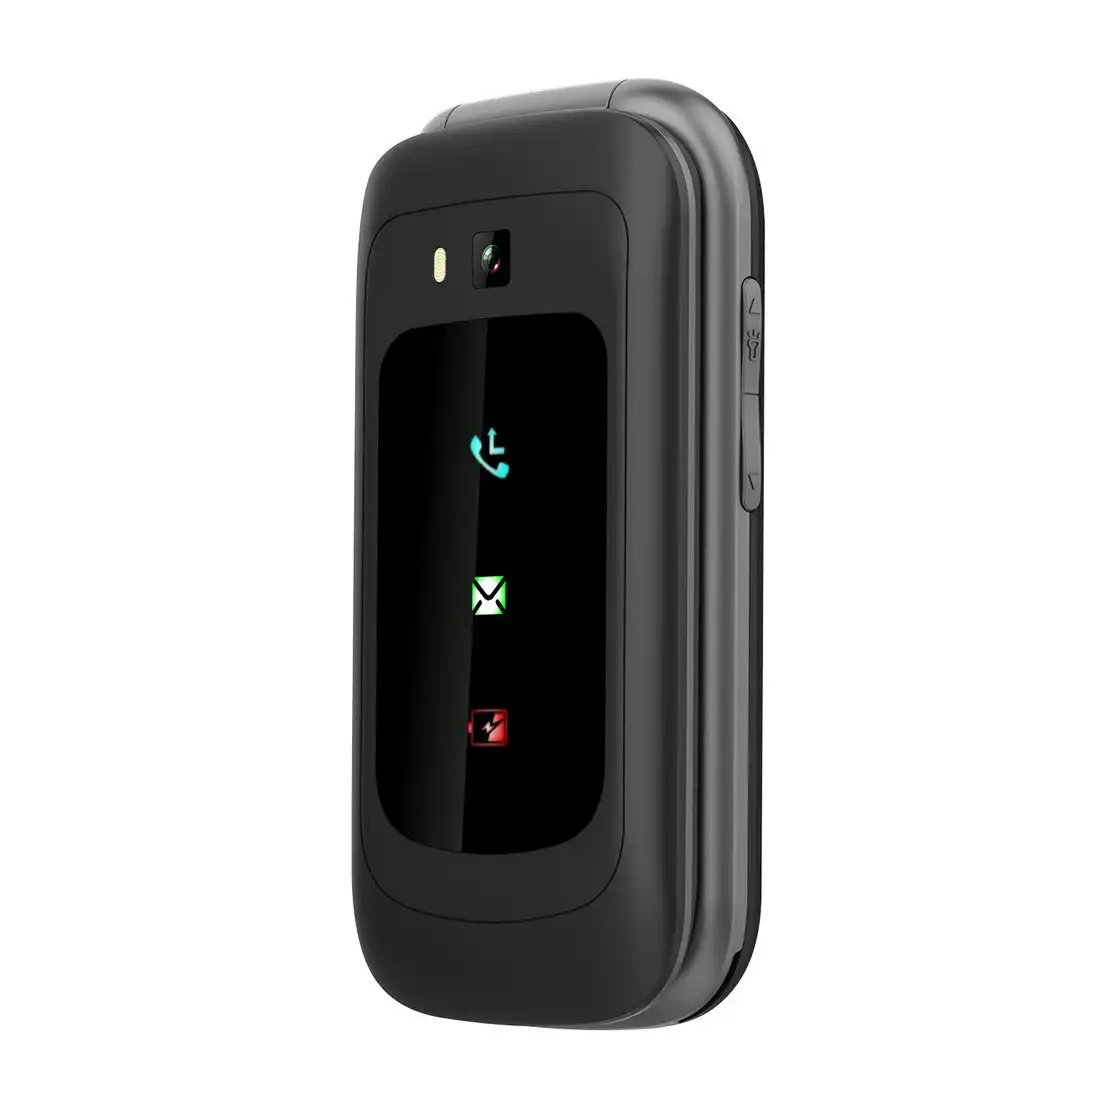 Opel Mobile 4G TouchFlip (2.8", Big Button, Flip Phone) - Black